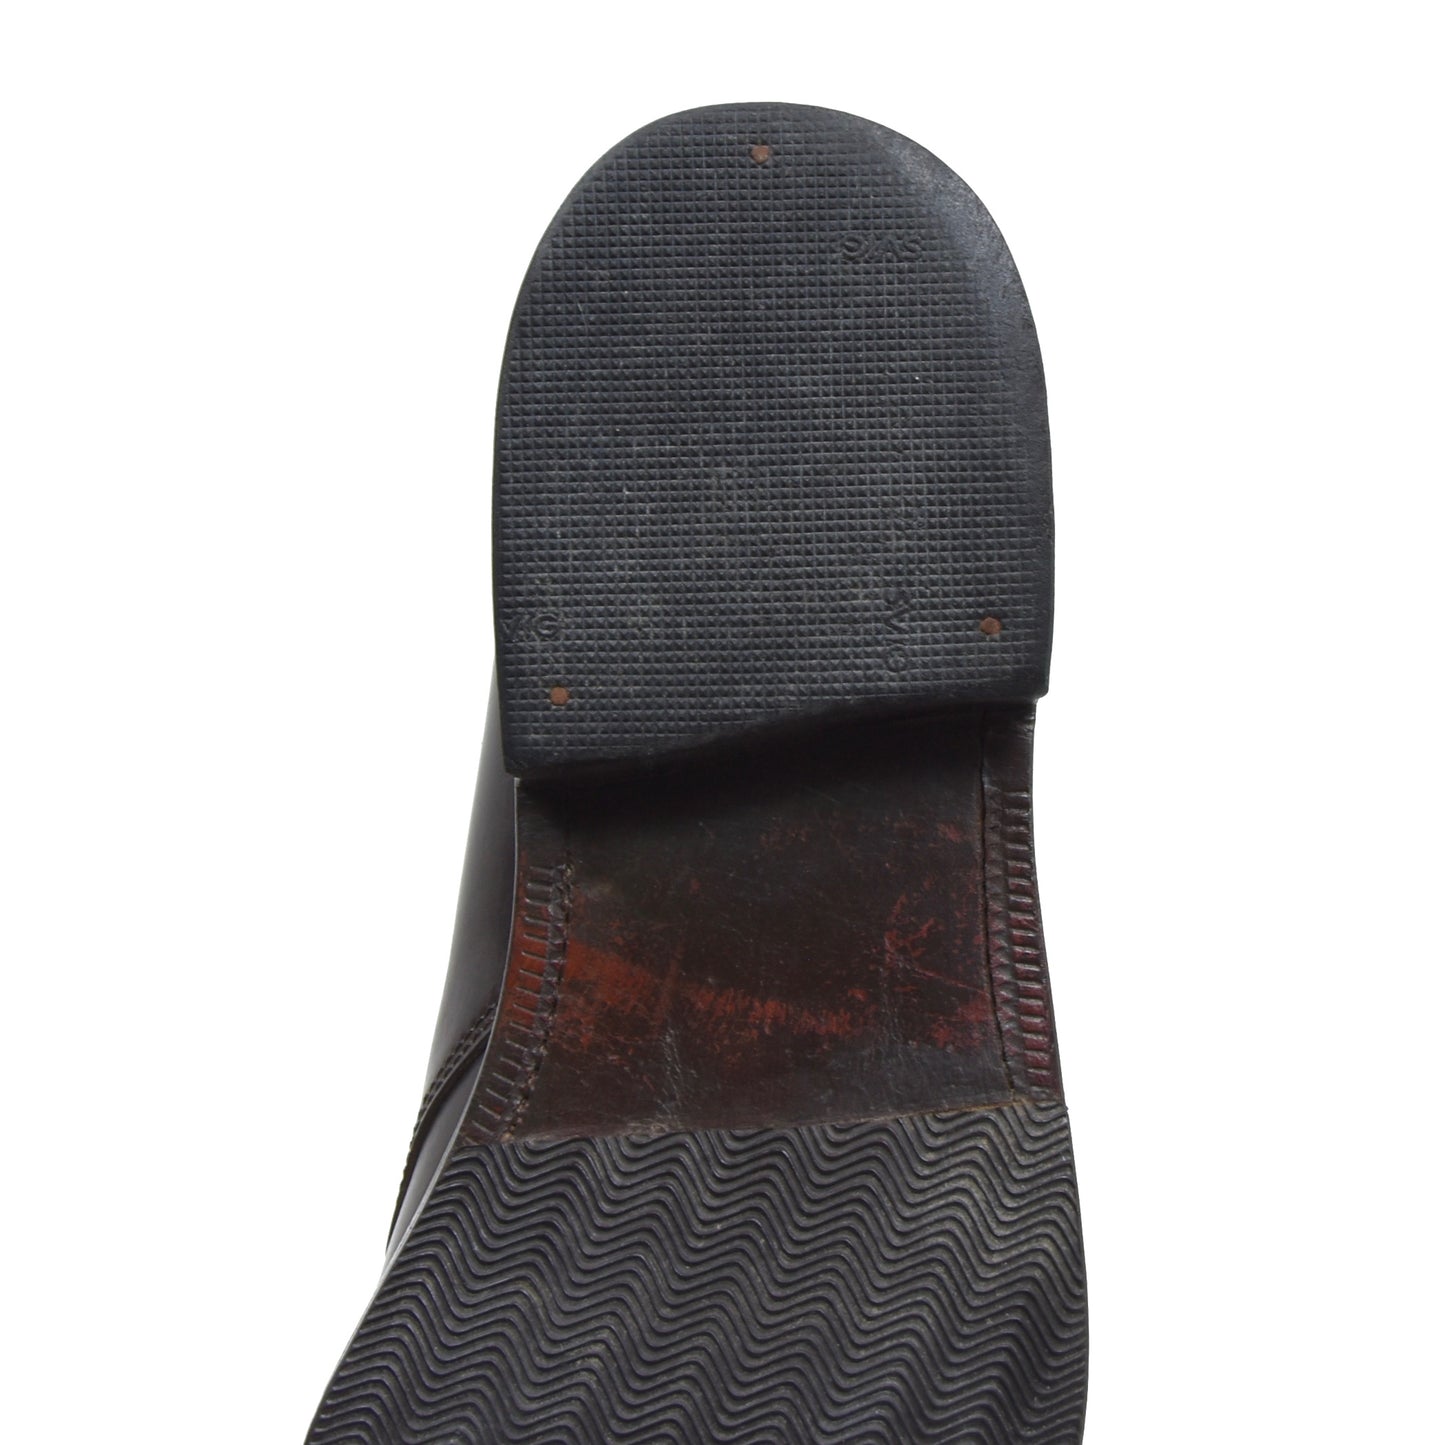 Ludwig Reiter Shell Cordovan Chukka Boots Size 7.5 - Dark Brown